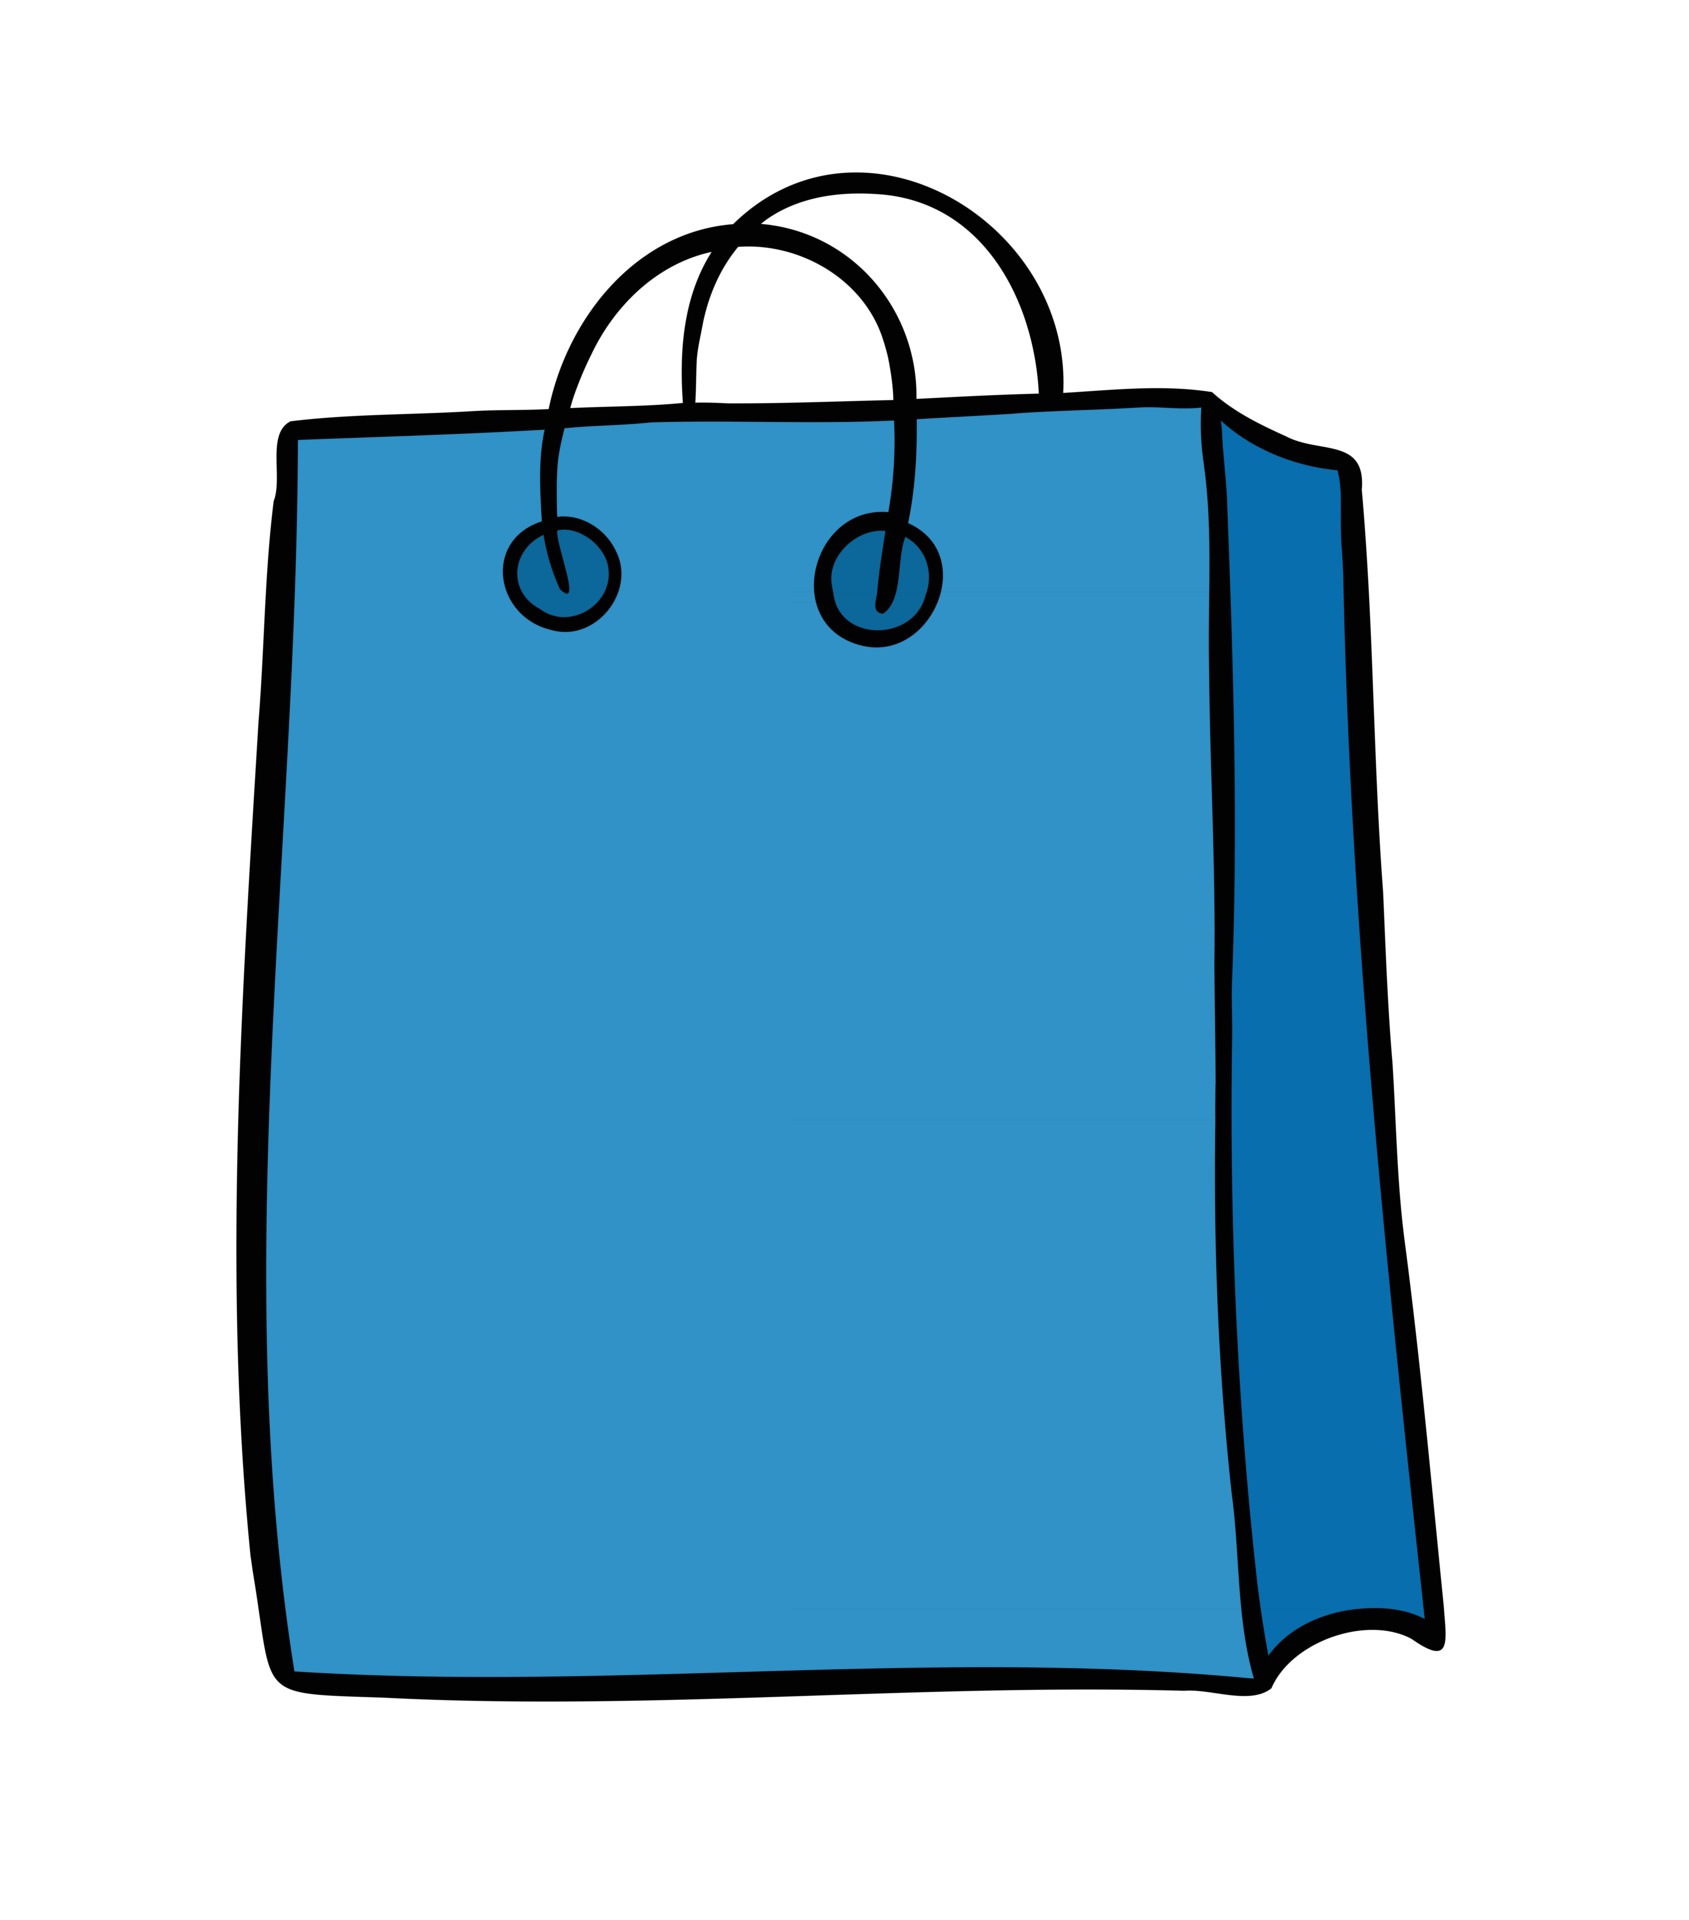 Cartoon Vector Illustration of Shopping Bag 2779739 Vector Art at Vecteezy